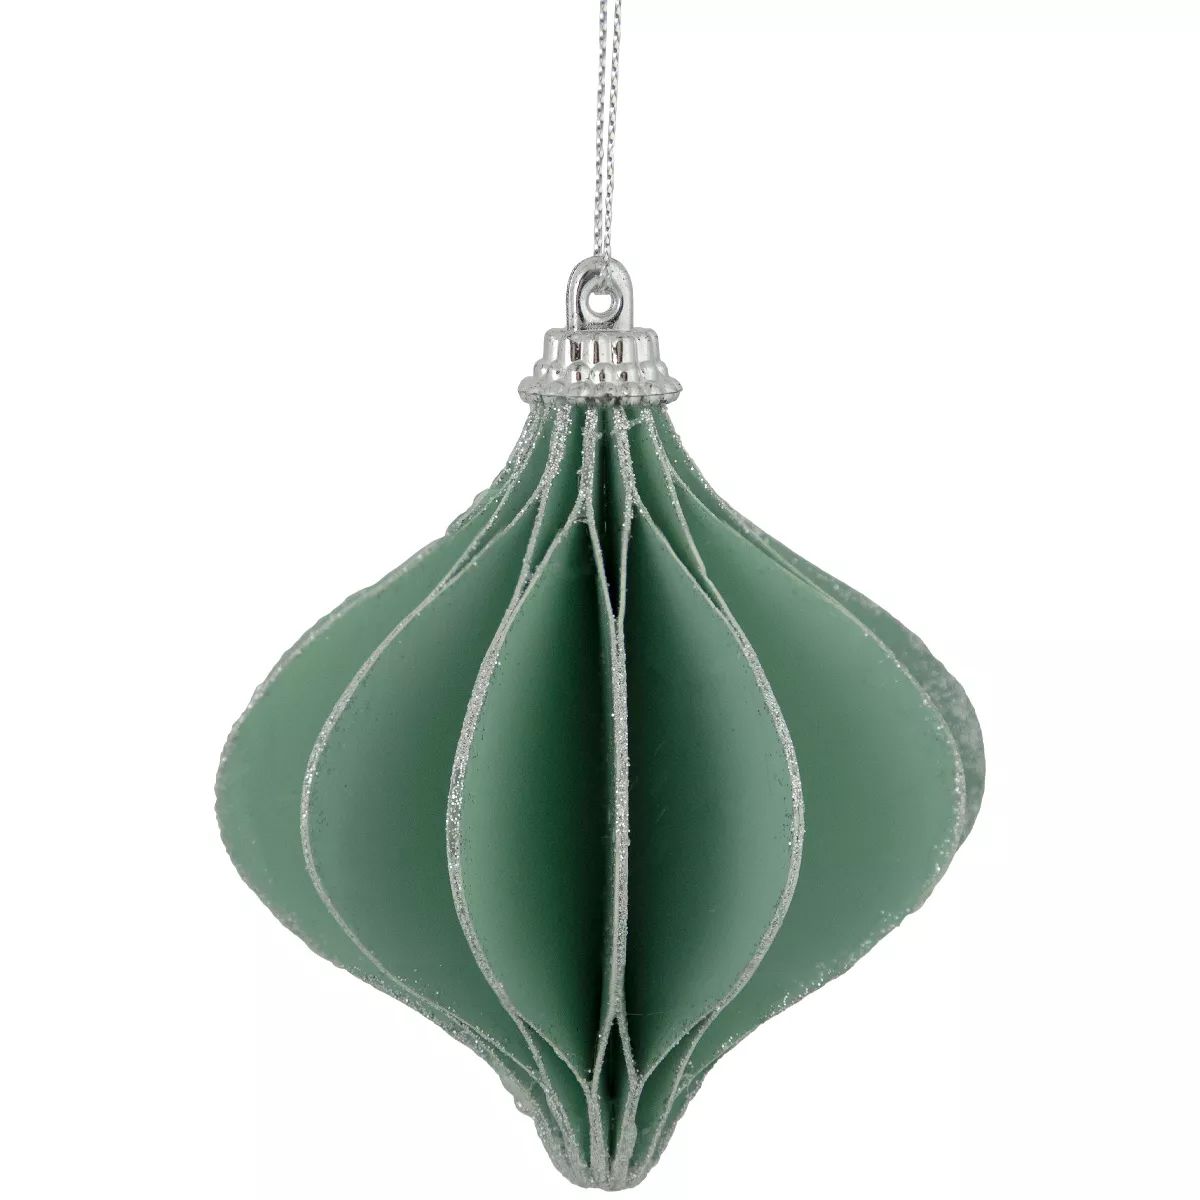 Northlight 4.25" Glittered Green Onion Christmas Ornament | Target